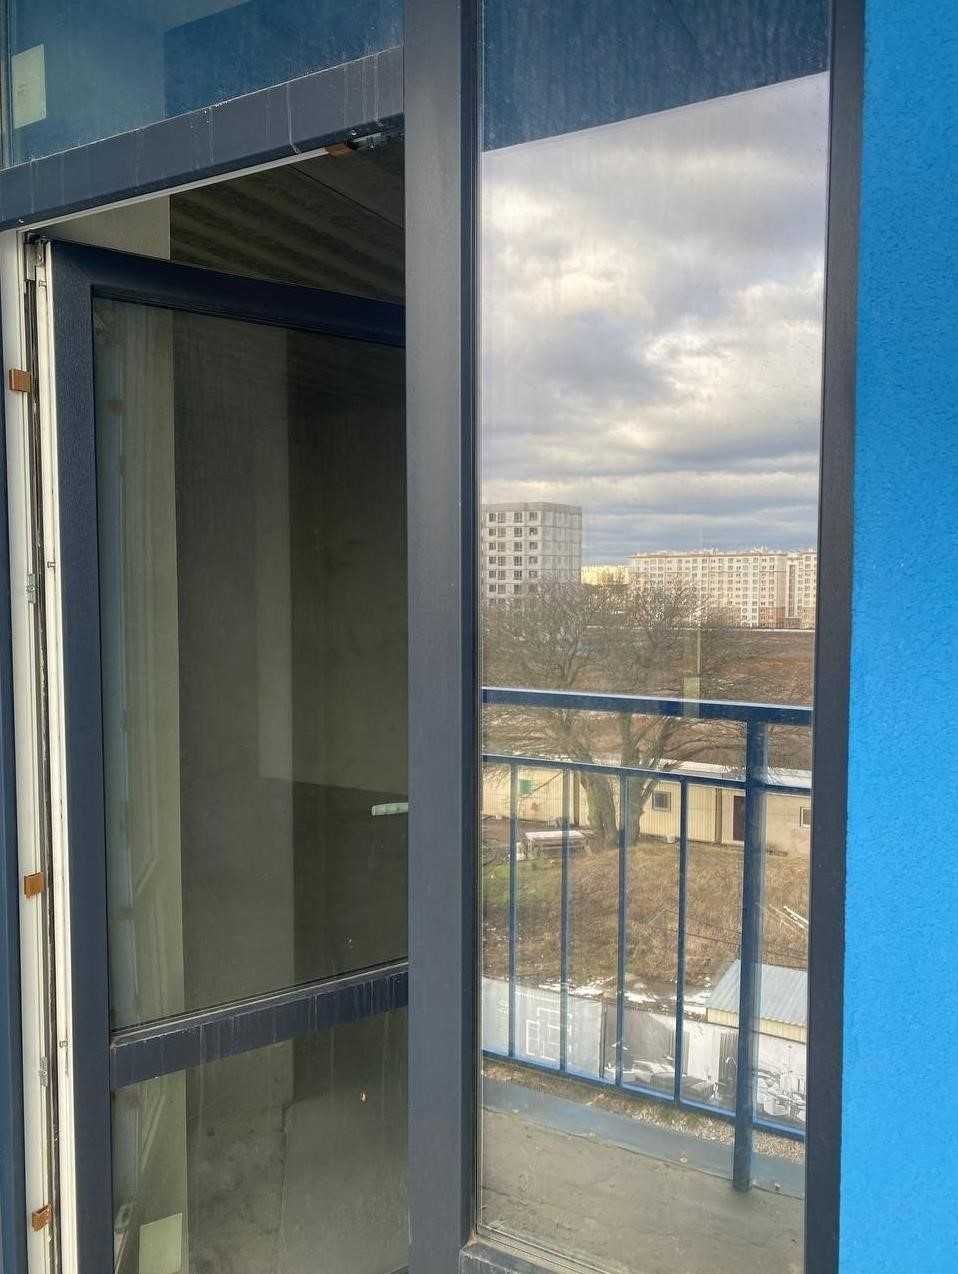 ЖК АРТ МІСТО. Квартира! Готова Новобудова з панорамними вікнами